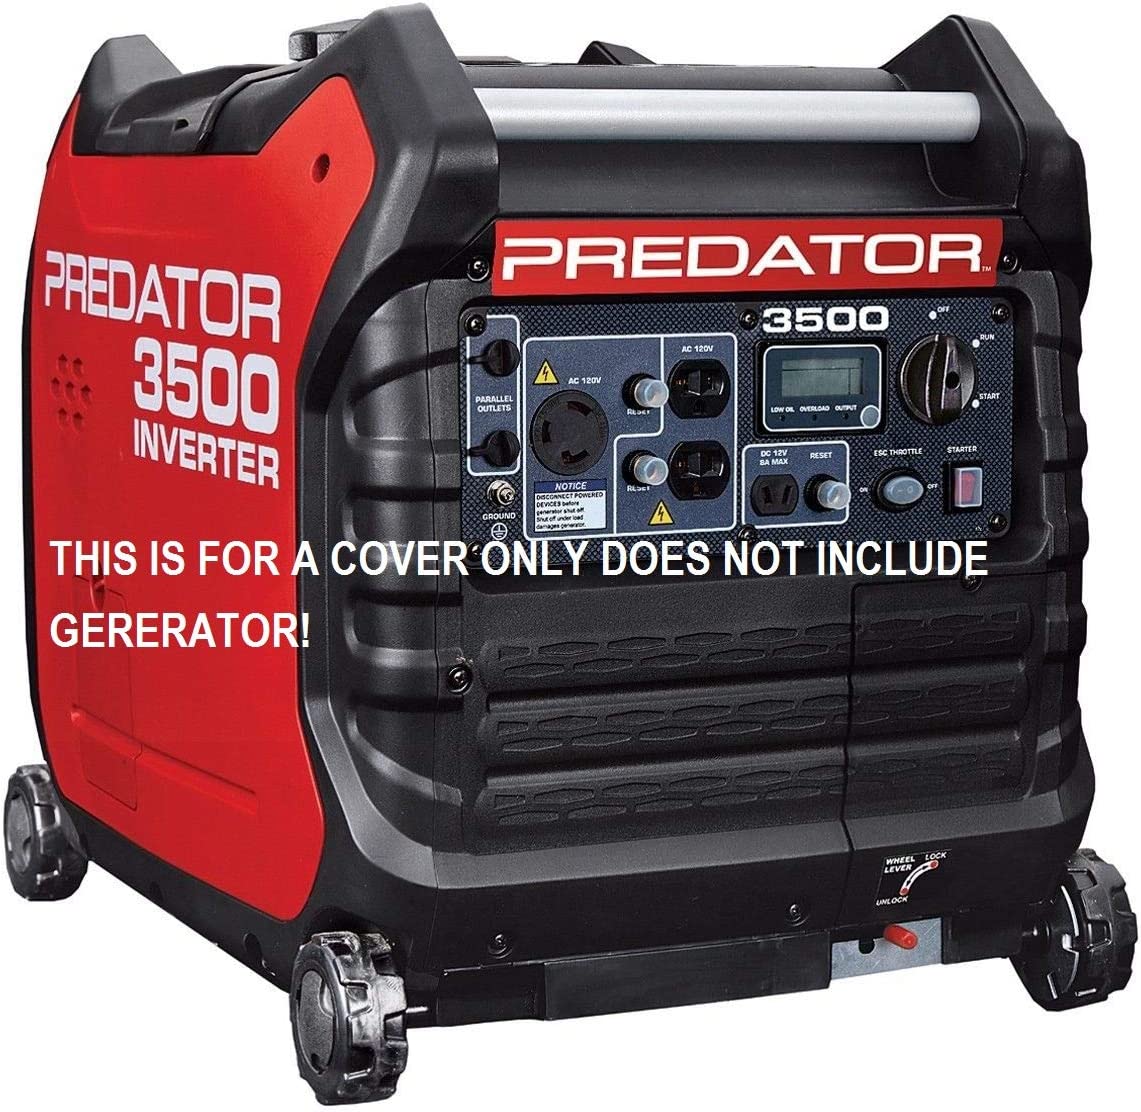 GCD Fits Predator Inverter 3500 watt Generator Cover (Black) Cover ONLY